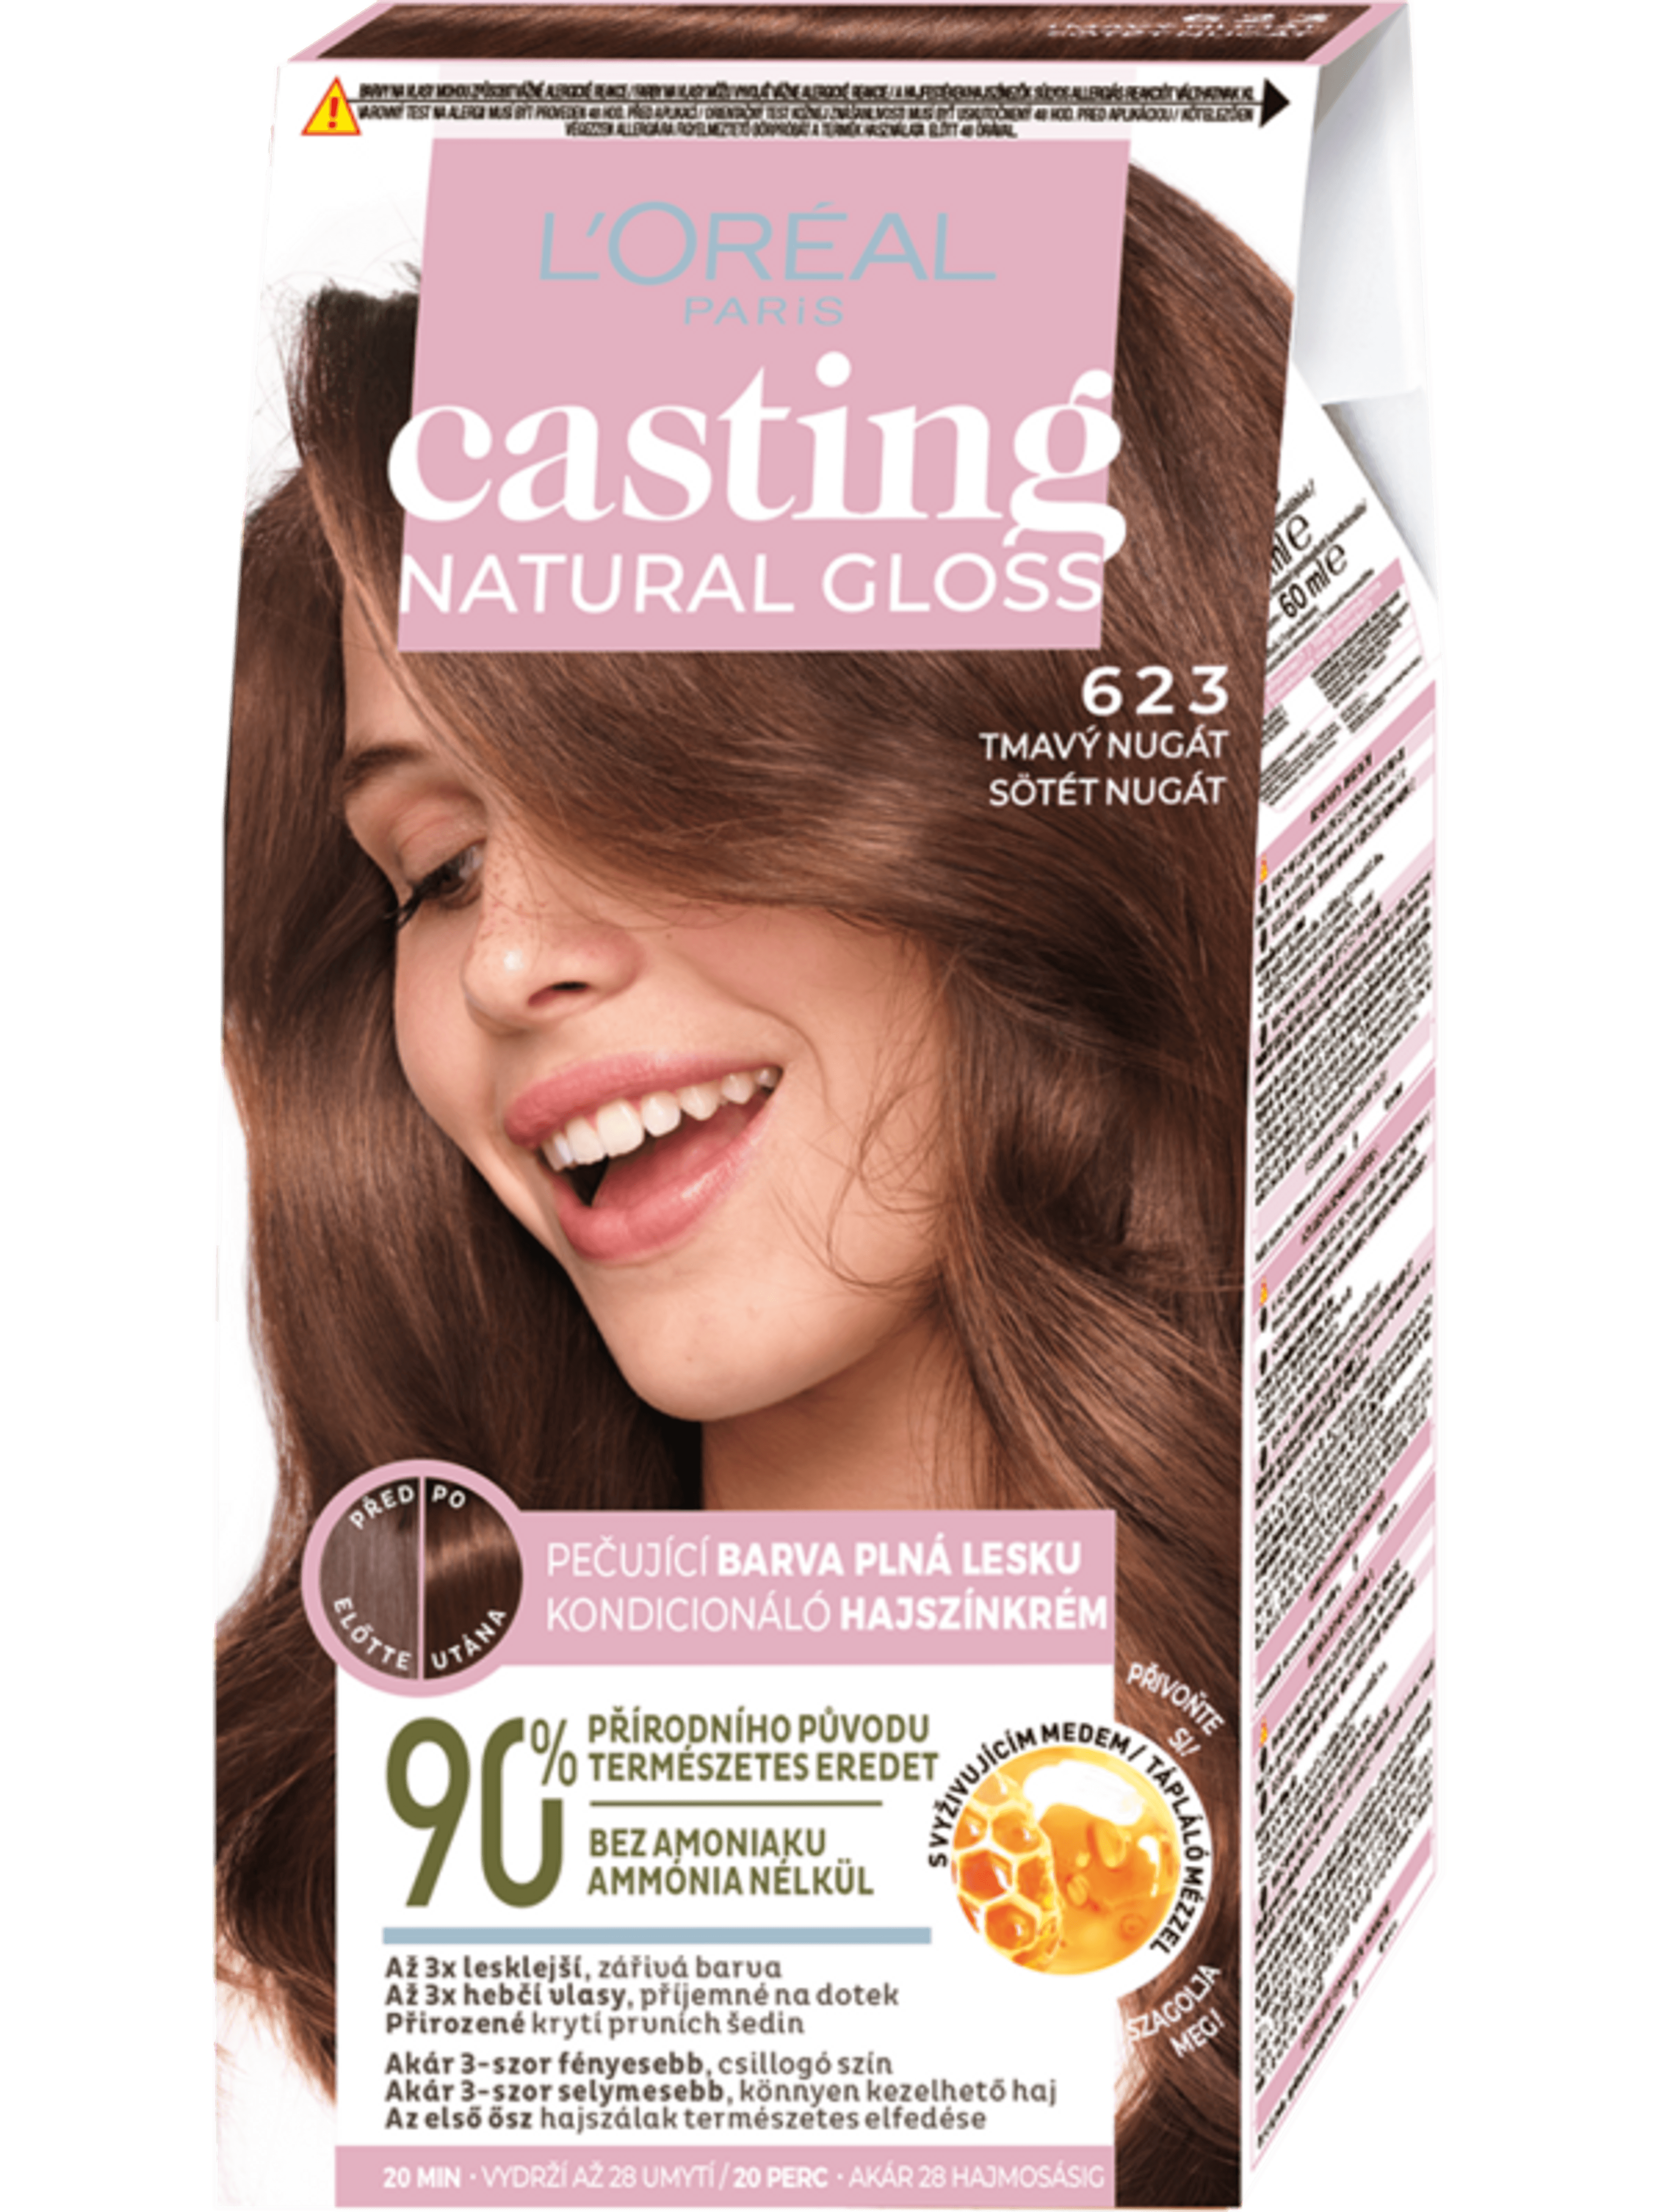 L'Oreal Paris Casting Natural Gloss hajszínező, 623 blonde miel - 1 db